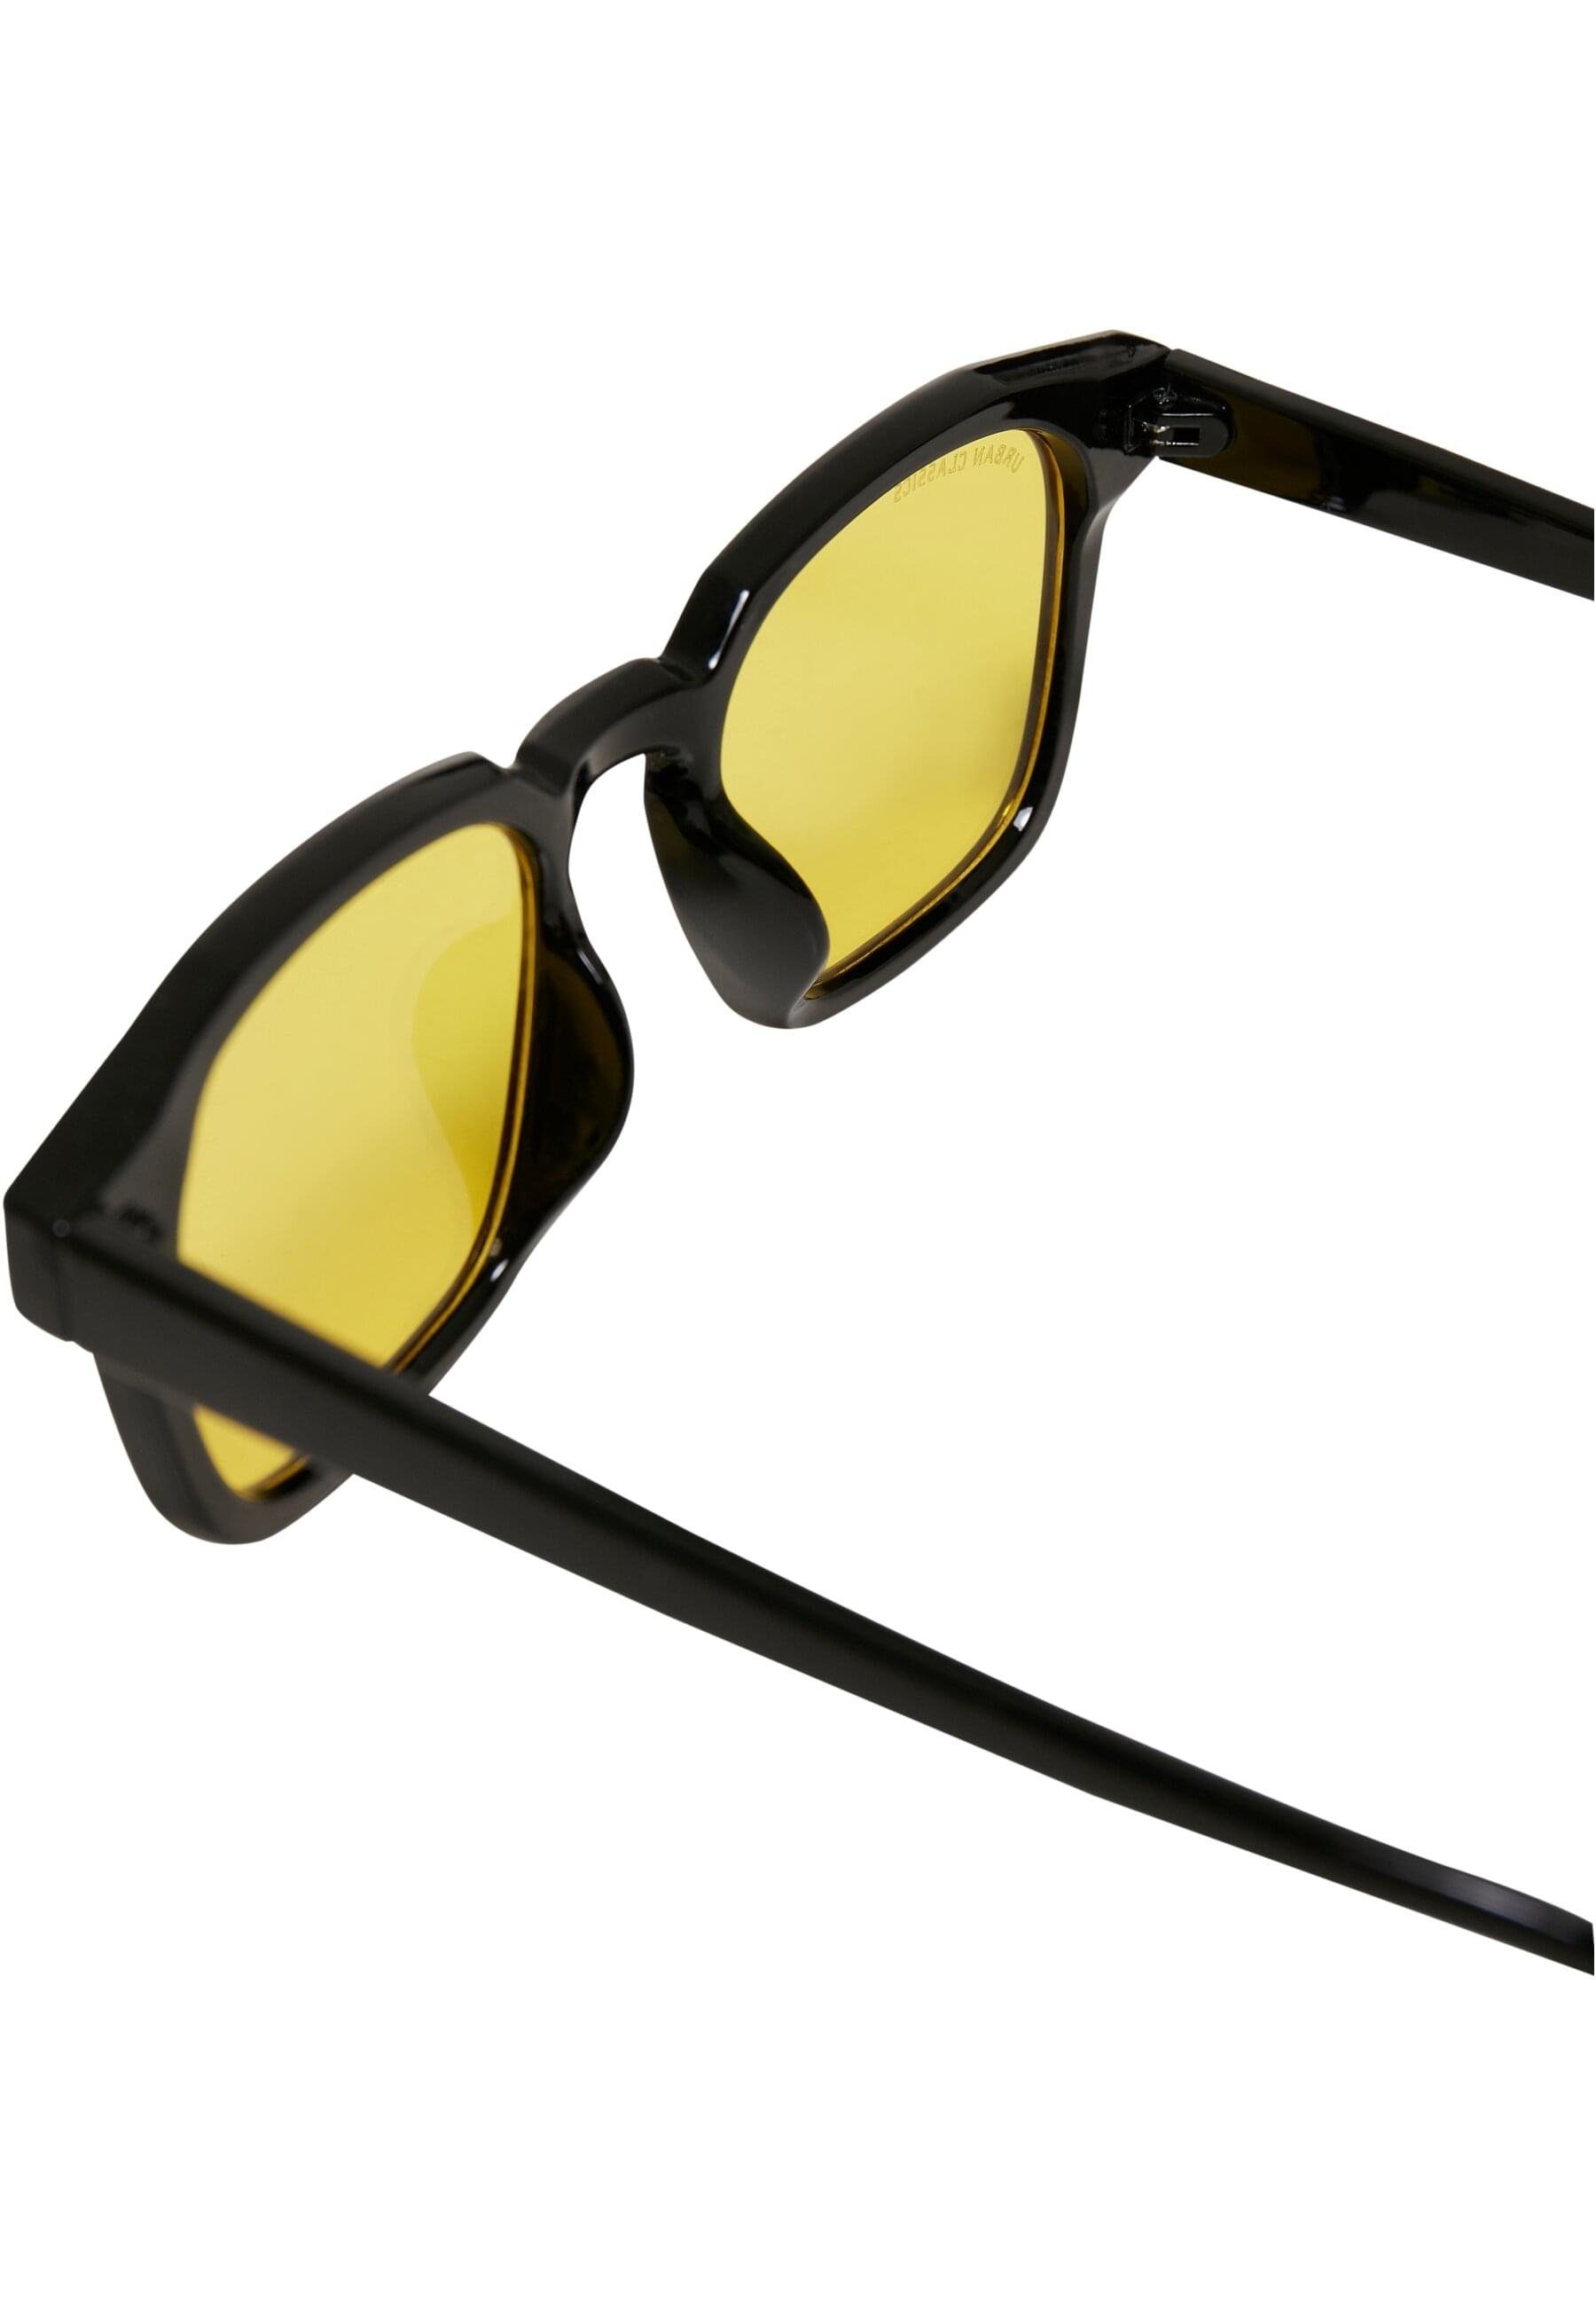 Sonnenbrille Unisex Sunglasses With CLASSICS URBAN Case Maui black/yellow